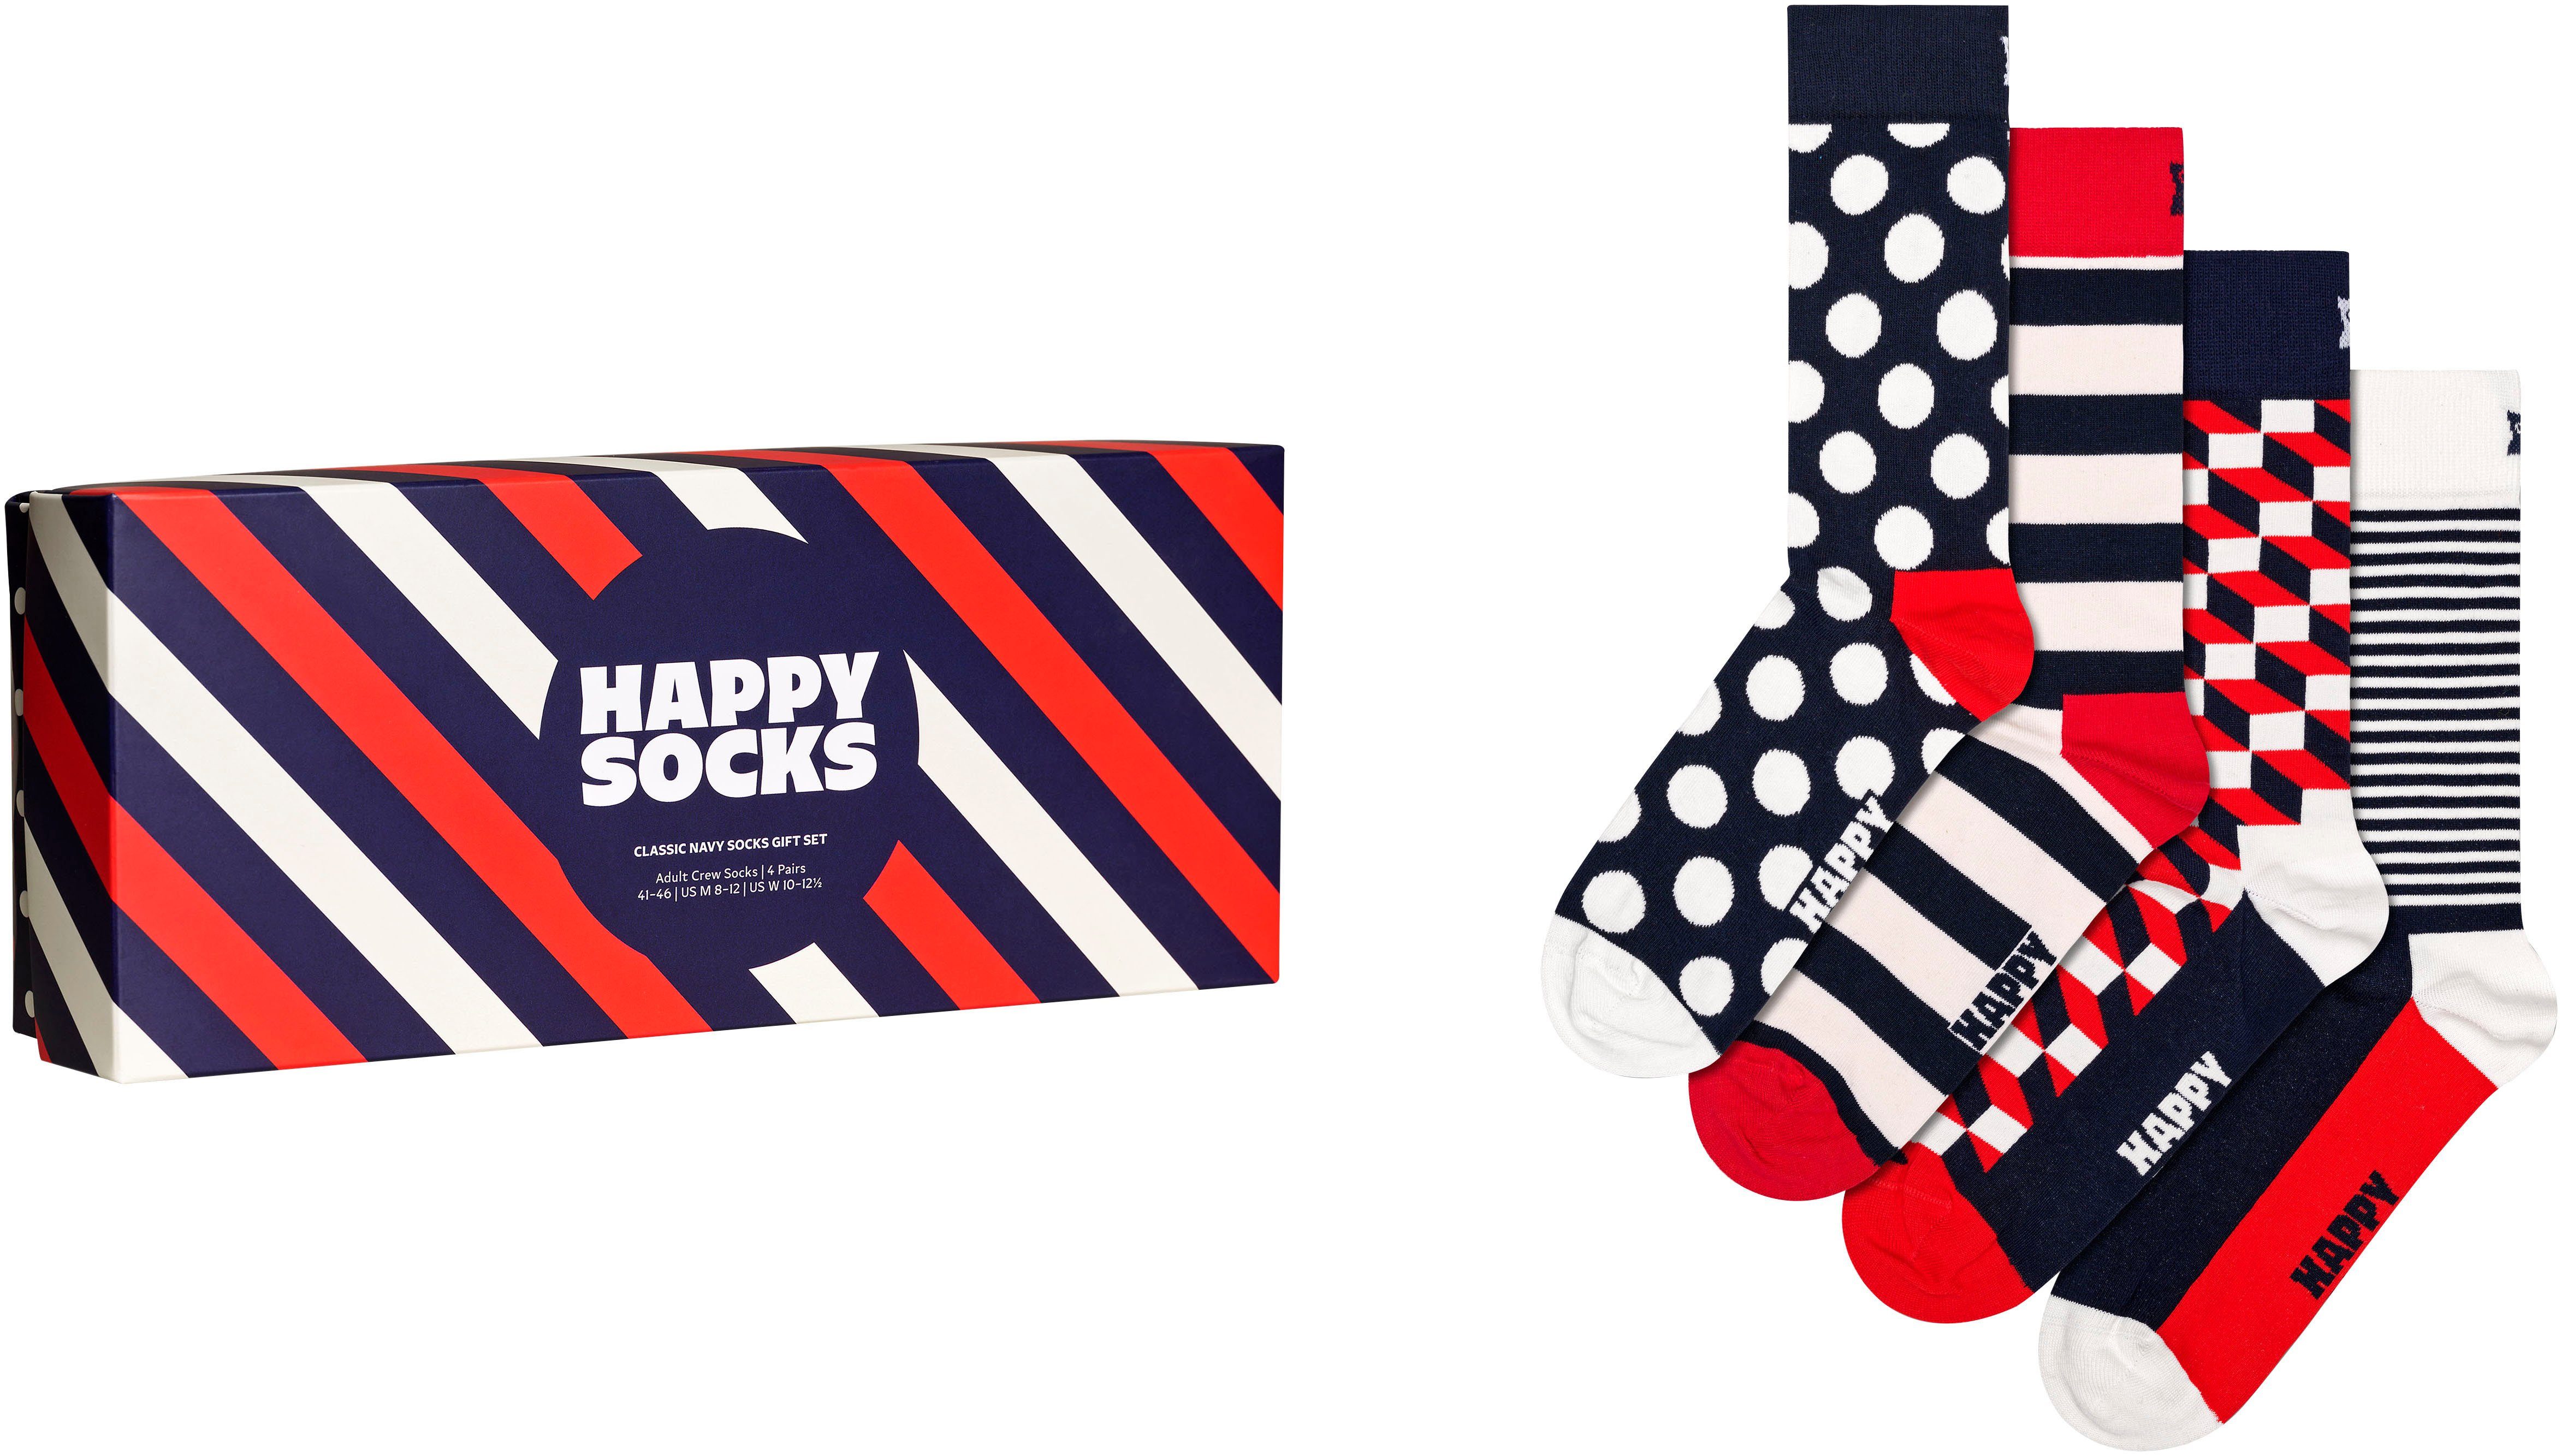 Happy Socks 2 & Set Navy Dots Navy Stripes Socken 4-Pack (Packung, 4-Paar) Classic Gift Socks Classic